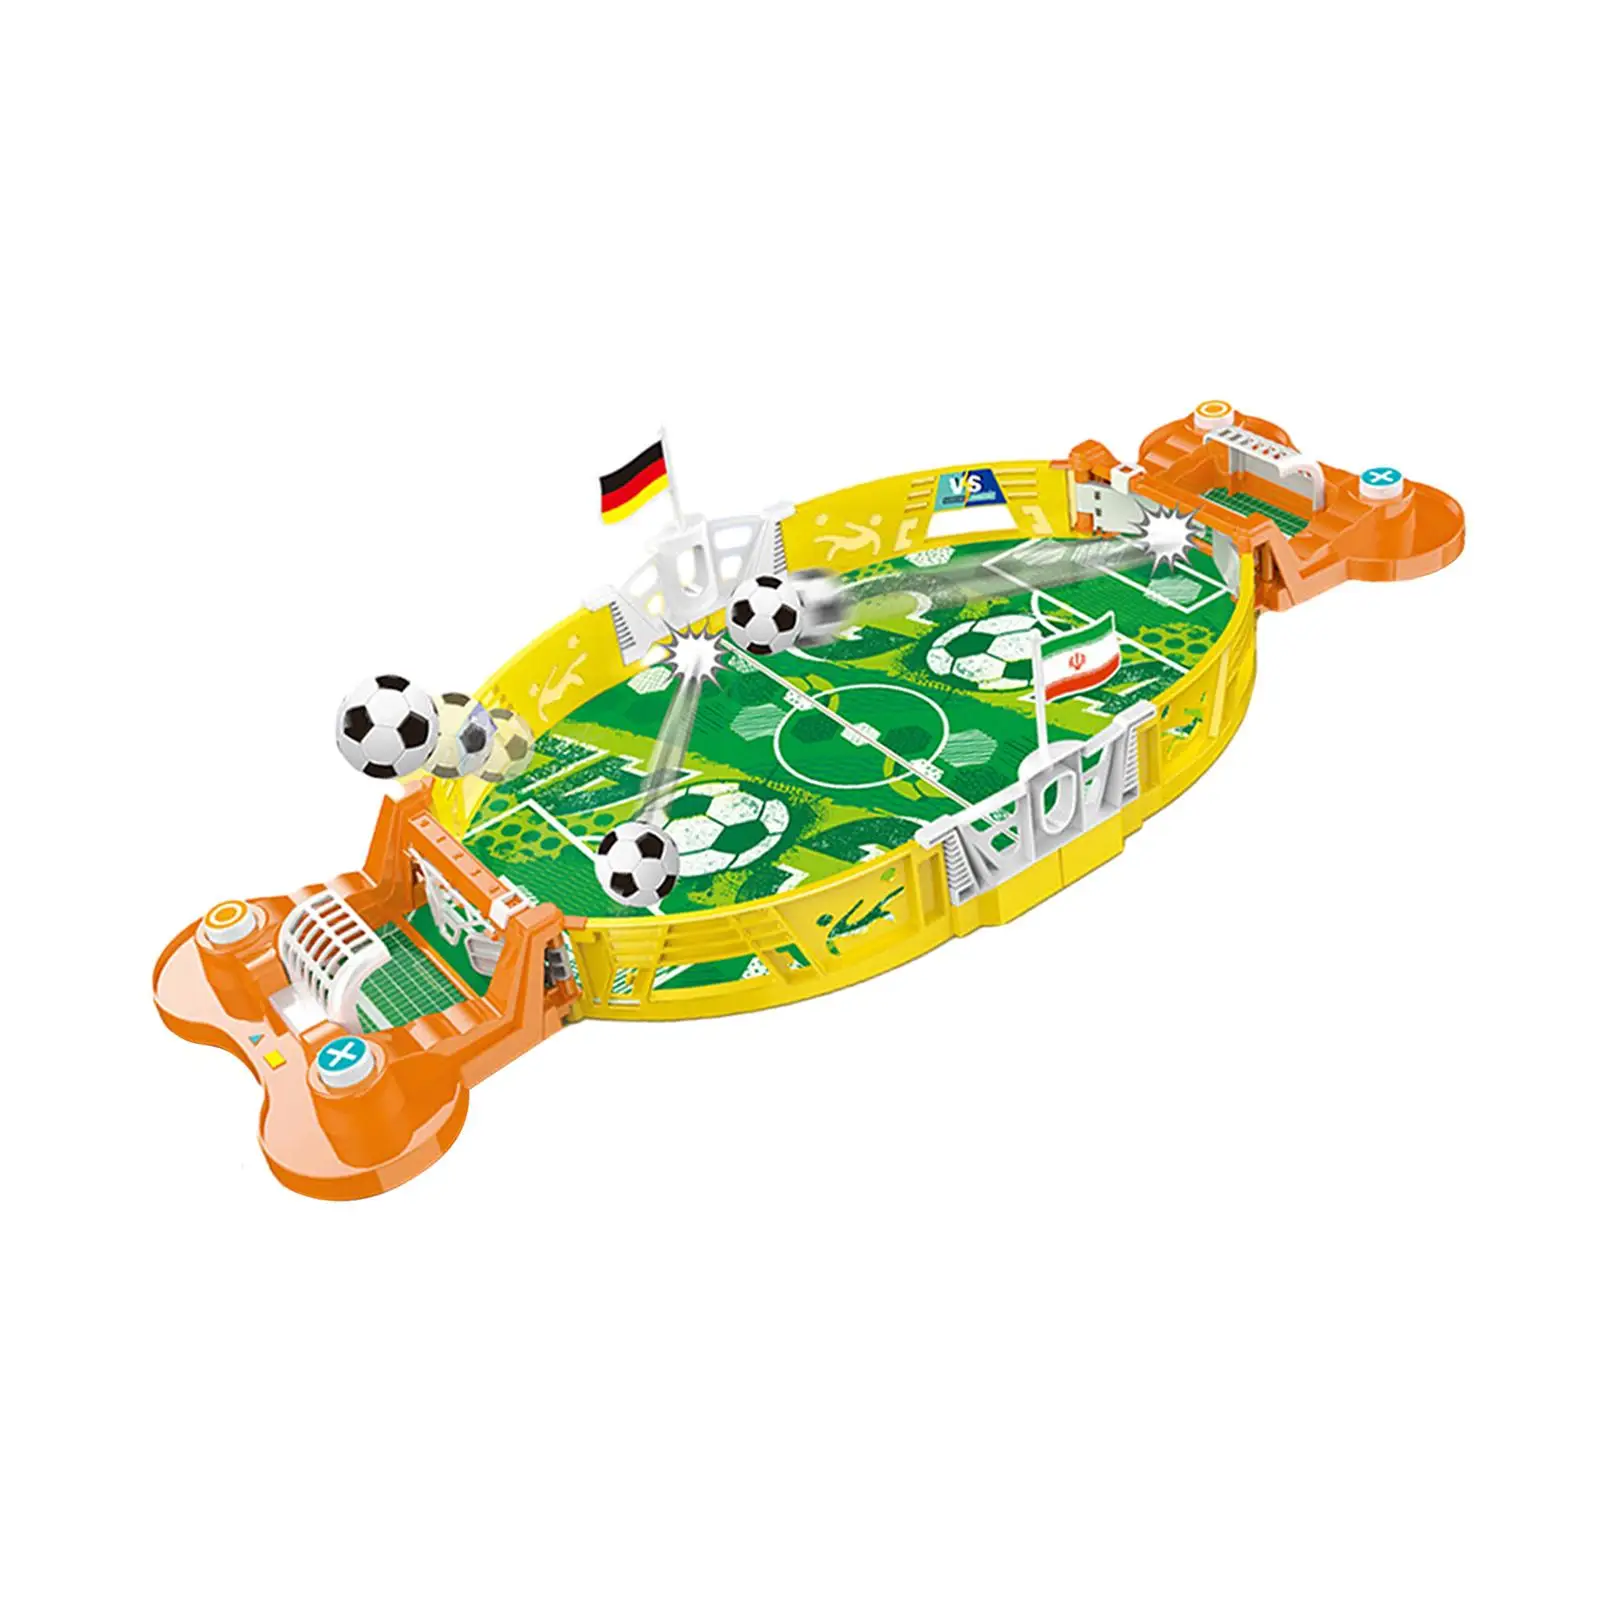 Tabletop Football Soccer Pinball Game Portable Desktop Toy Mini Foosball Games for Kids Adults Entertainment Boys Girls Family